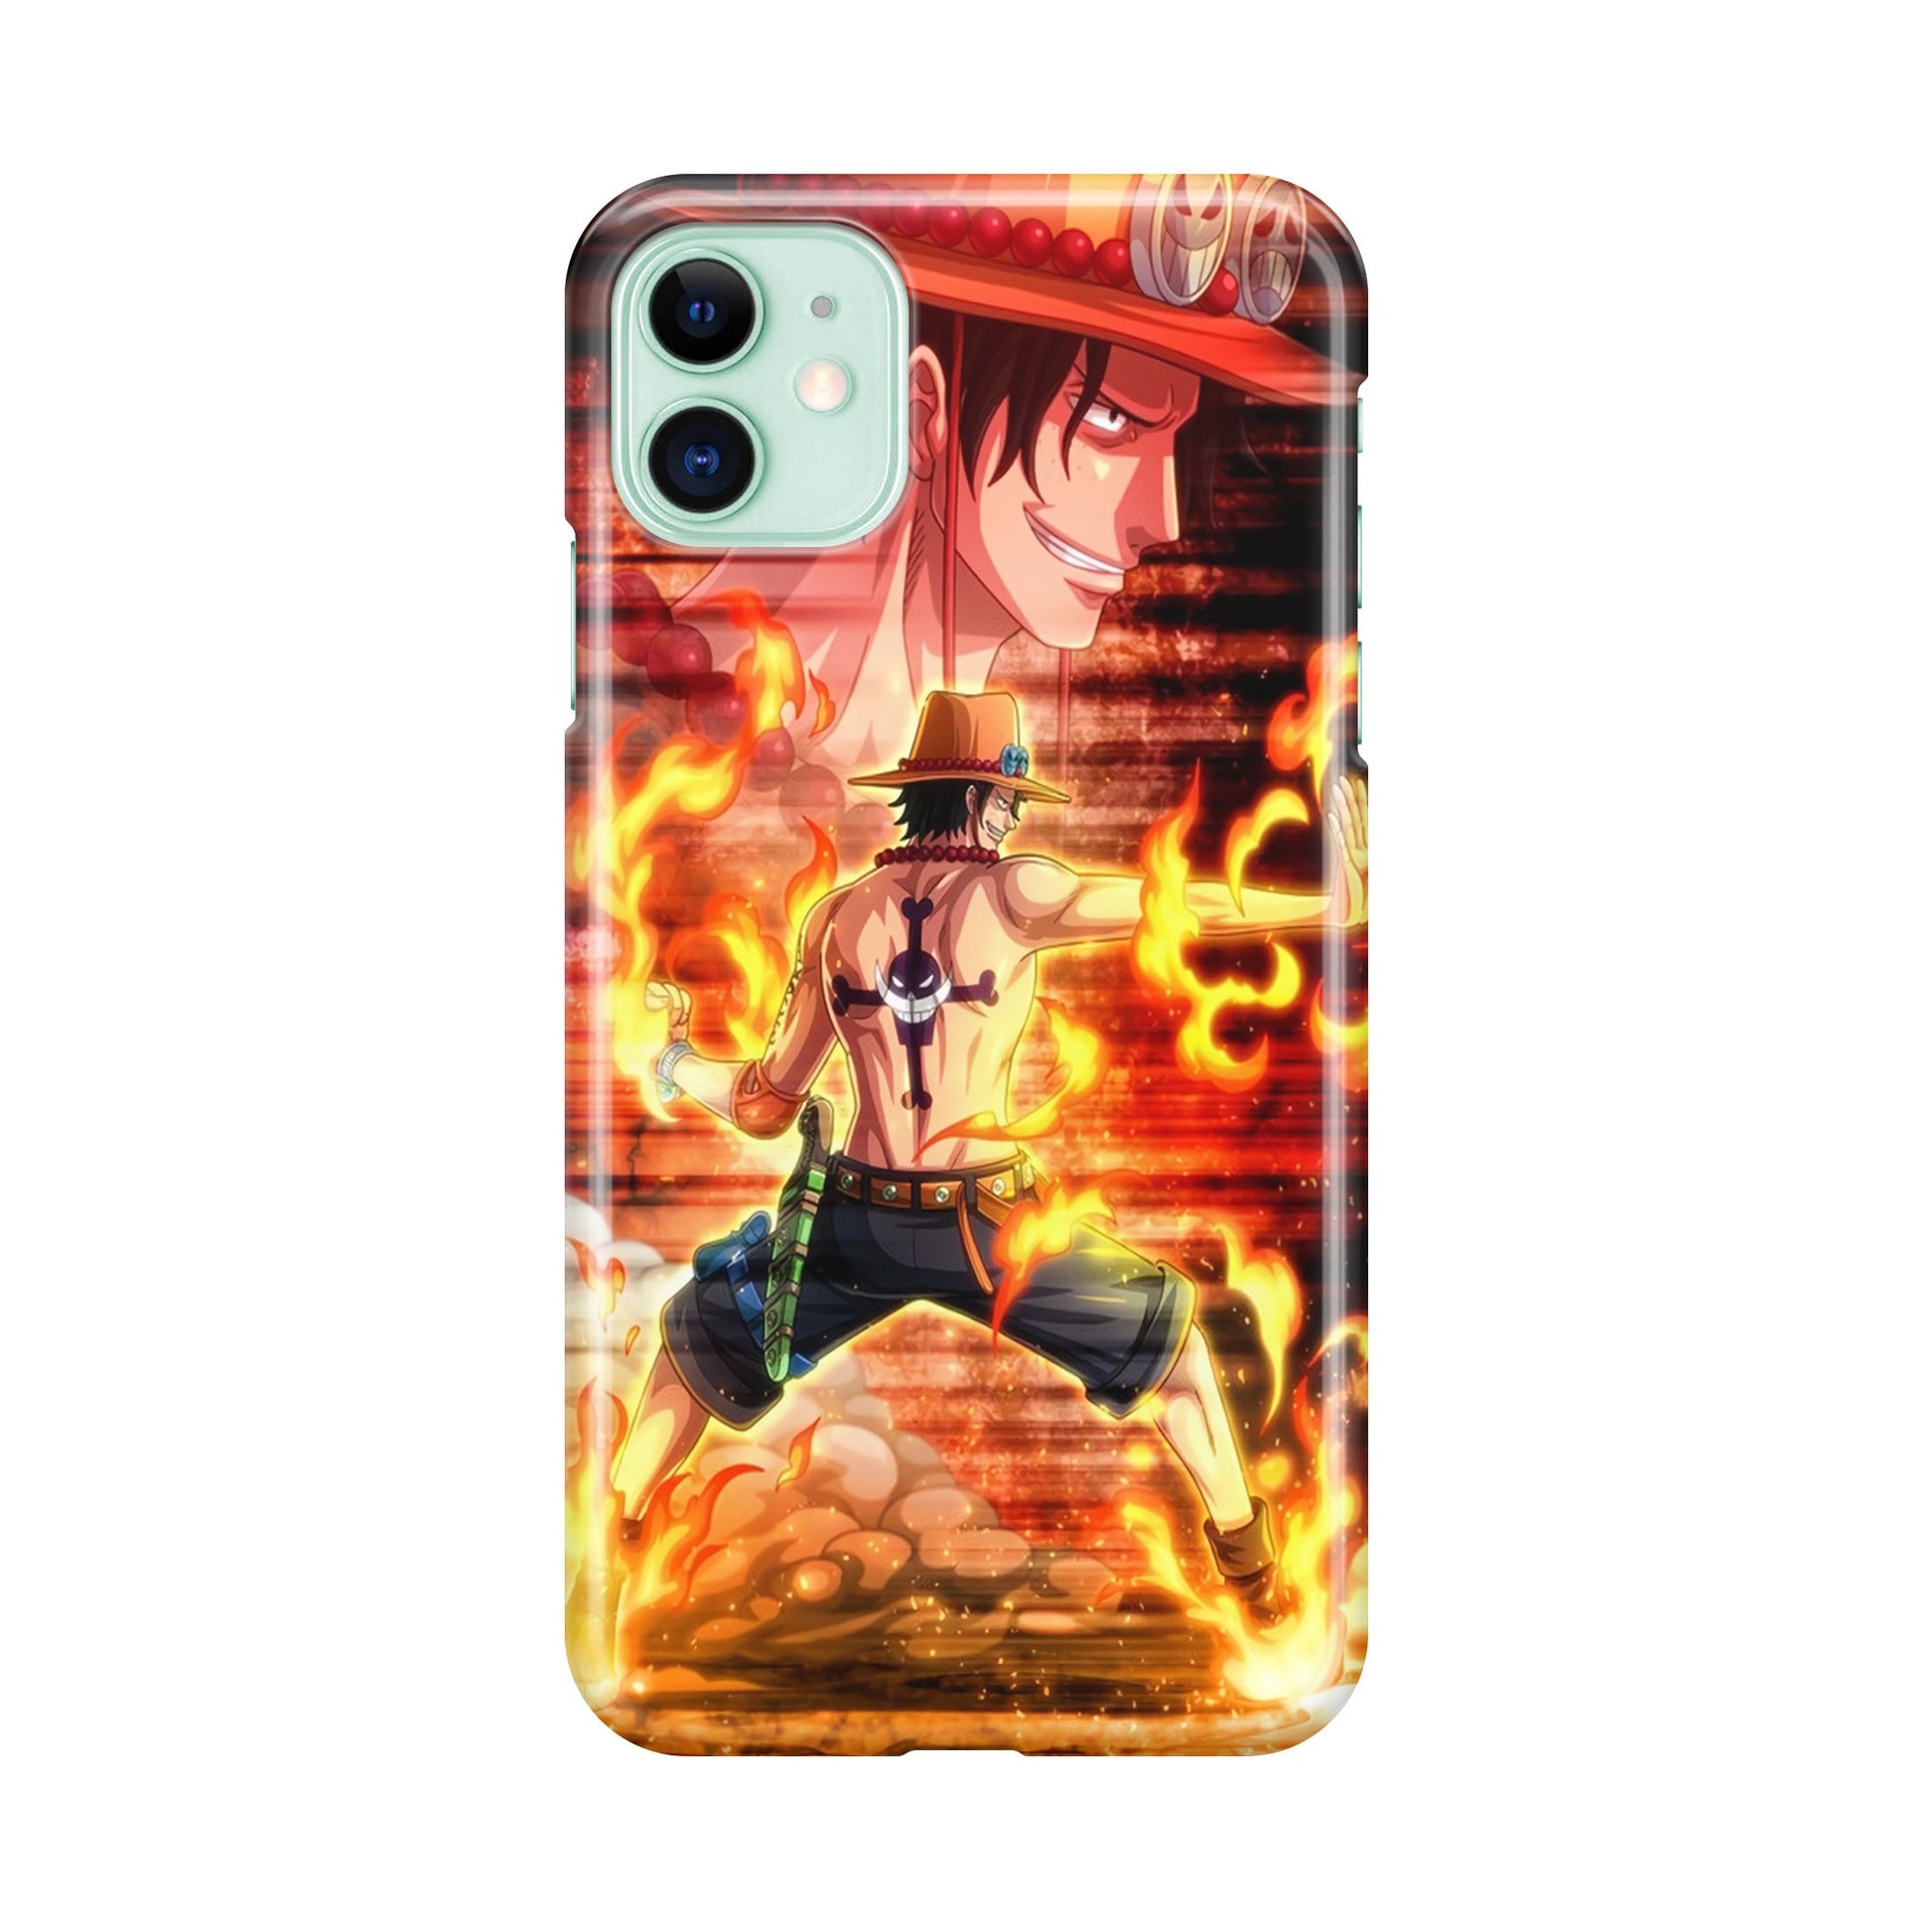 Portgas D Ace One Piece iPhone 12 Case